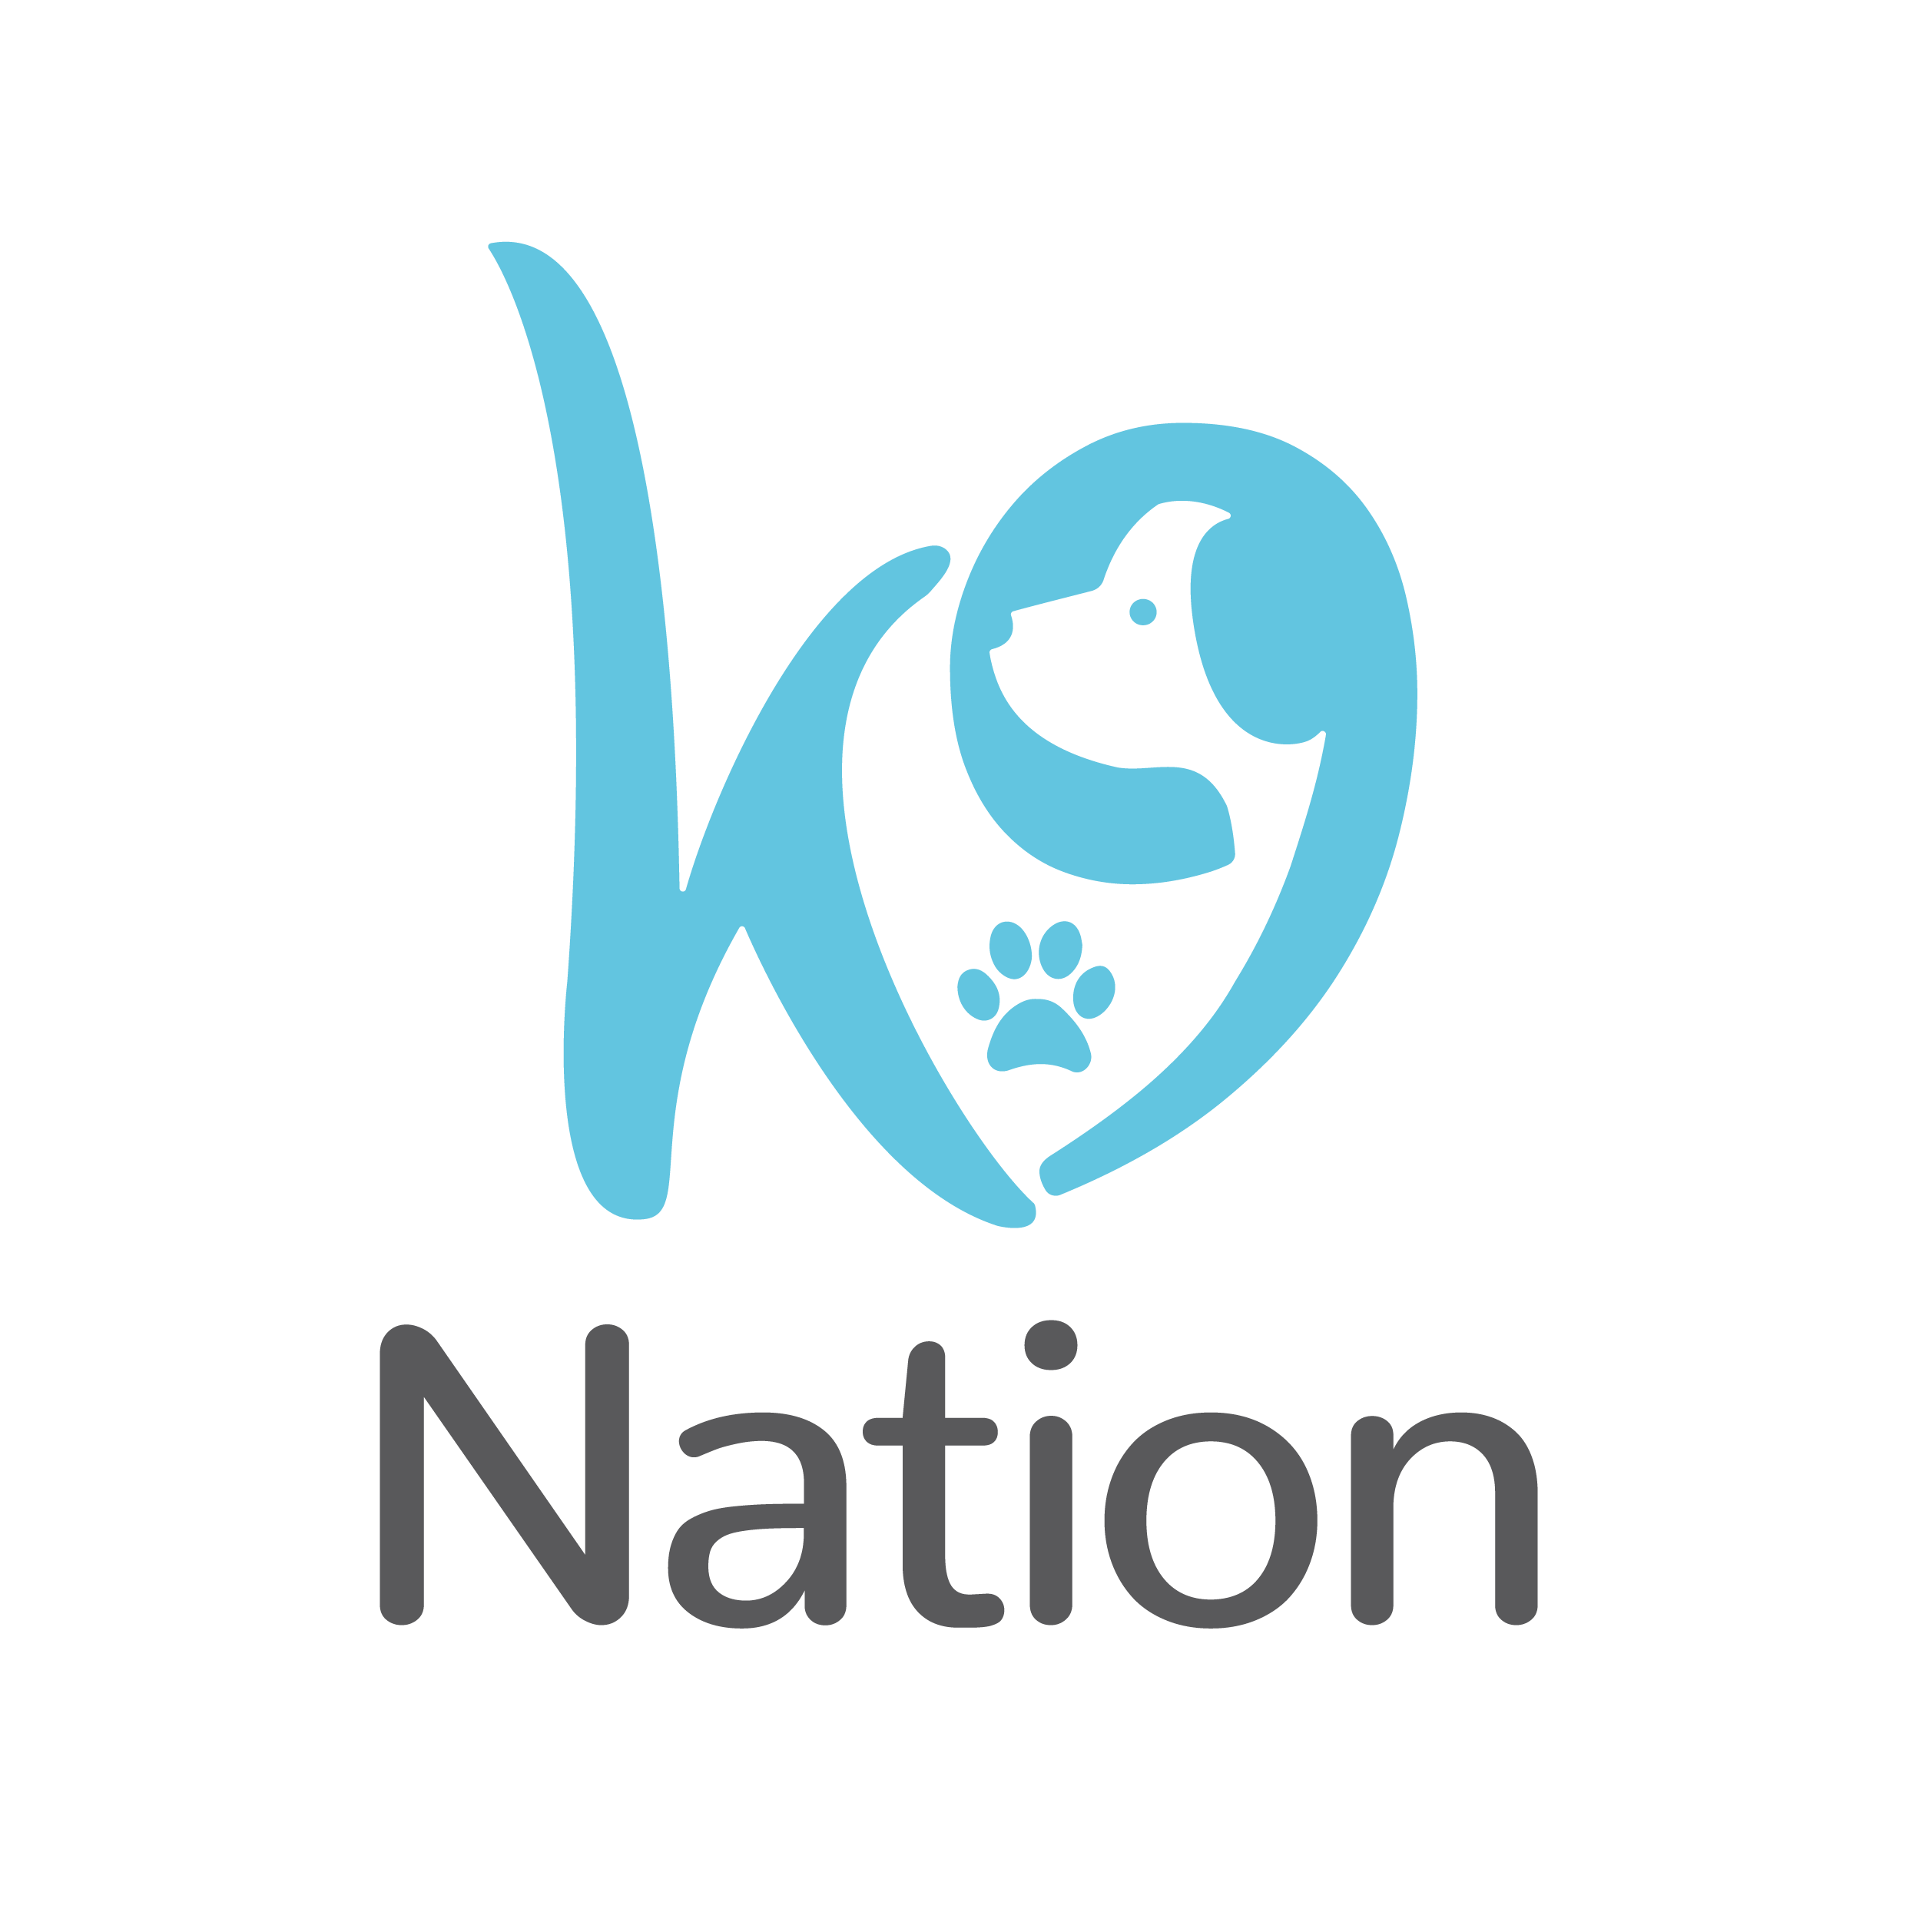 K9 Nation logo